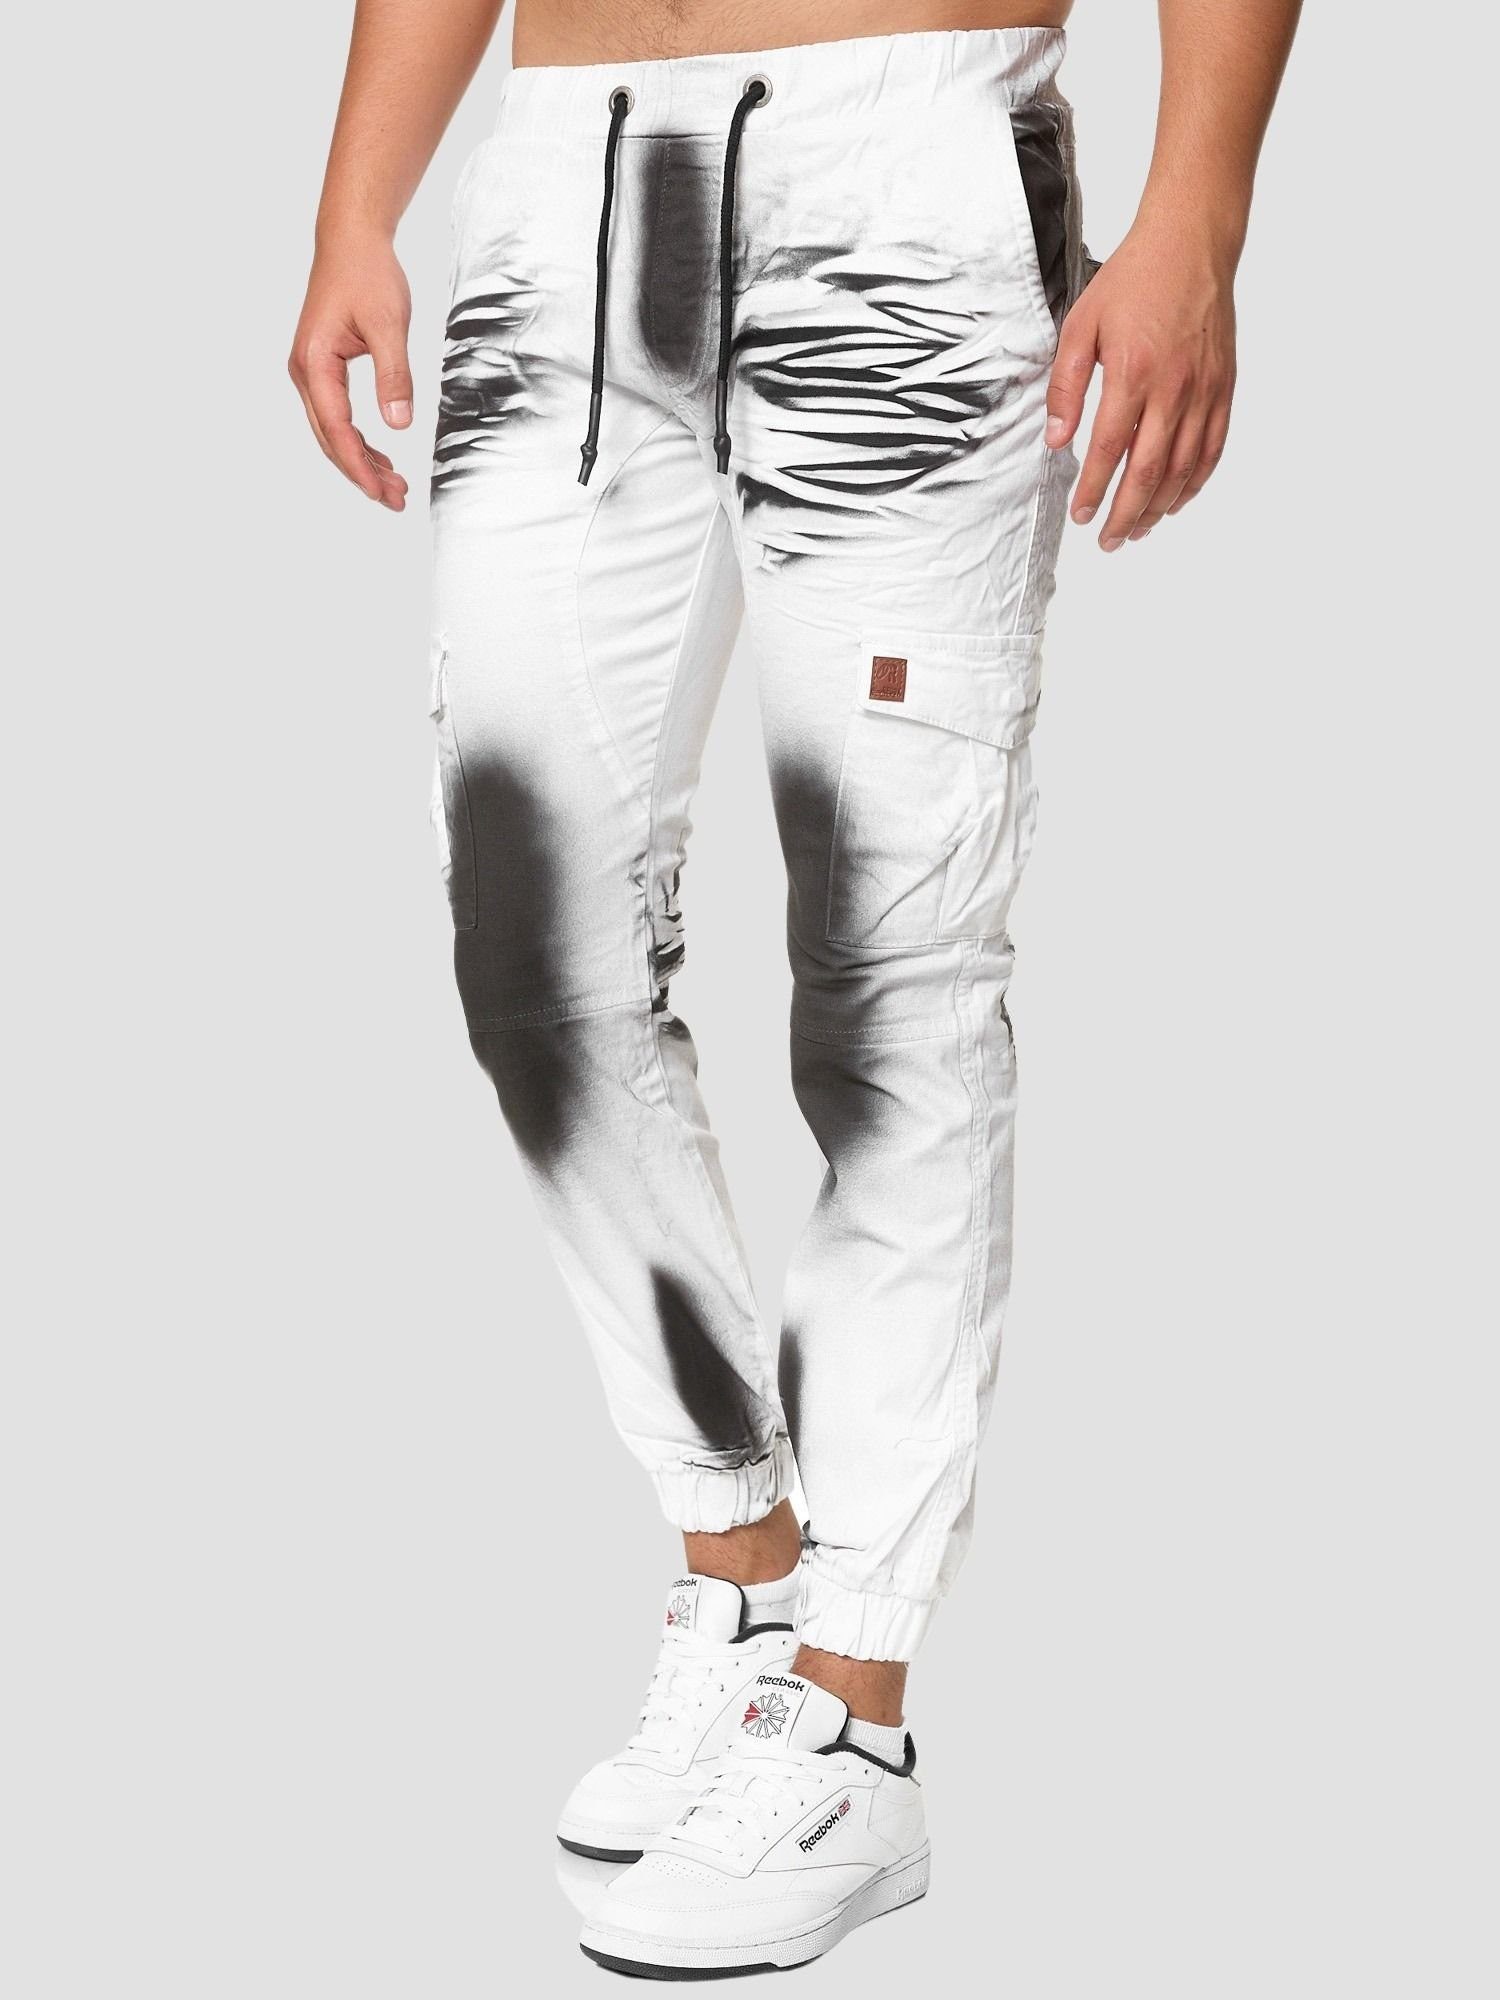 John Kayna Bequeme Jeans Herren Cargo Hose Slim Fit Utility Jeans Männer Chino Herrenhose Stoff (Chino Cargohose Streetwear, 1-tlg) Freizeit Business Casual Dirty White